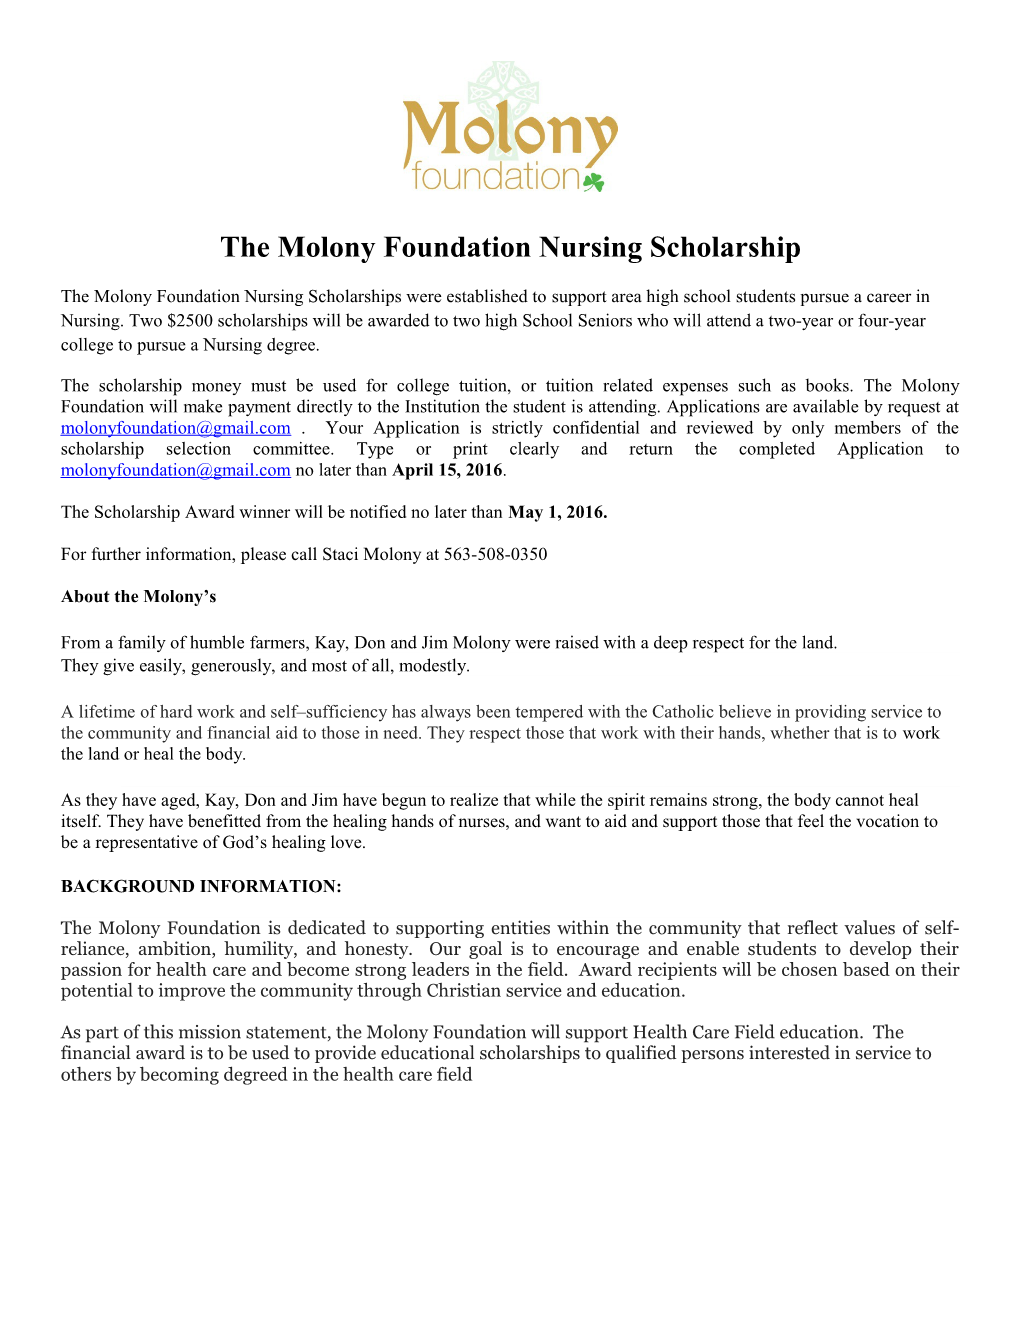 The Molony Foundation Nursing Scholarship